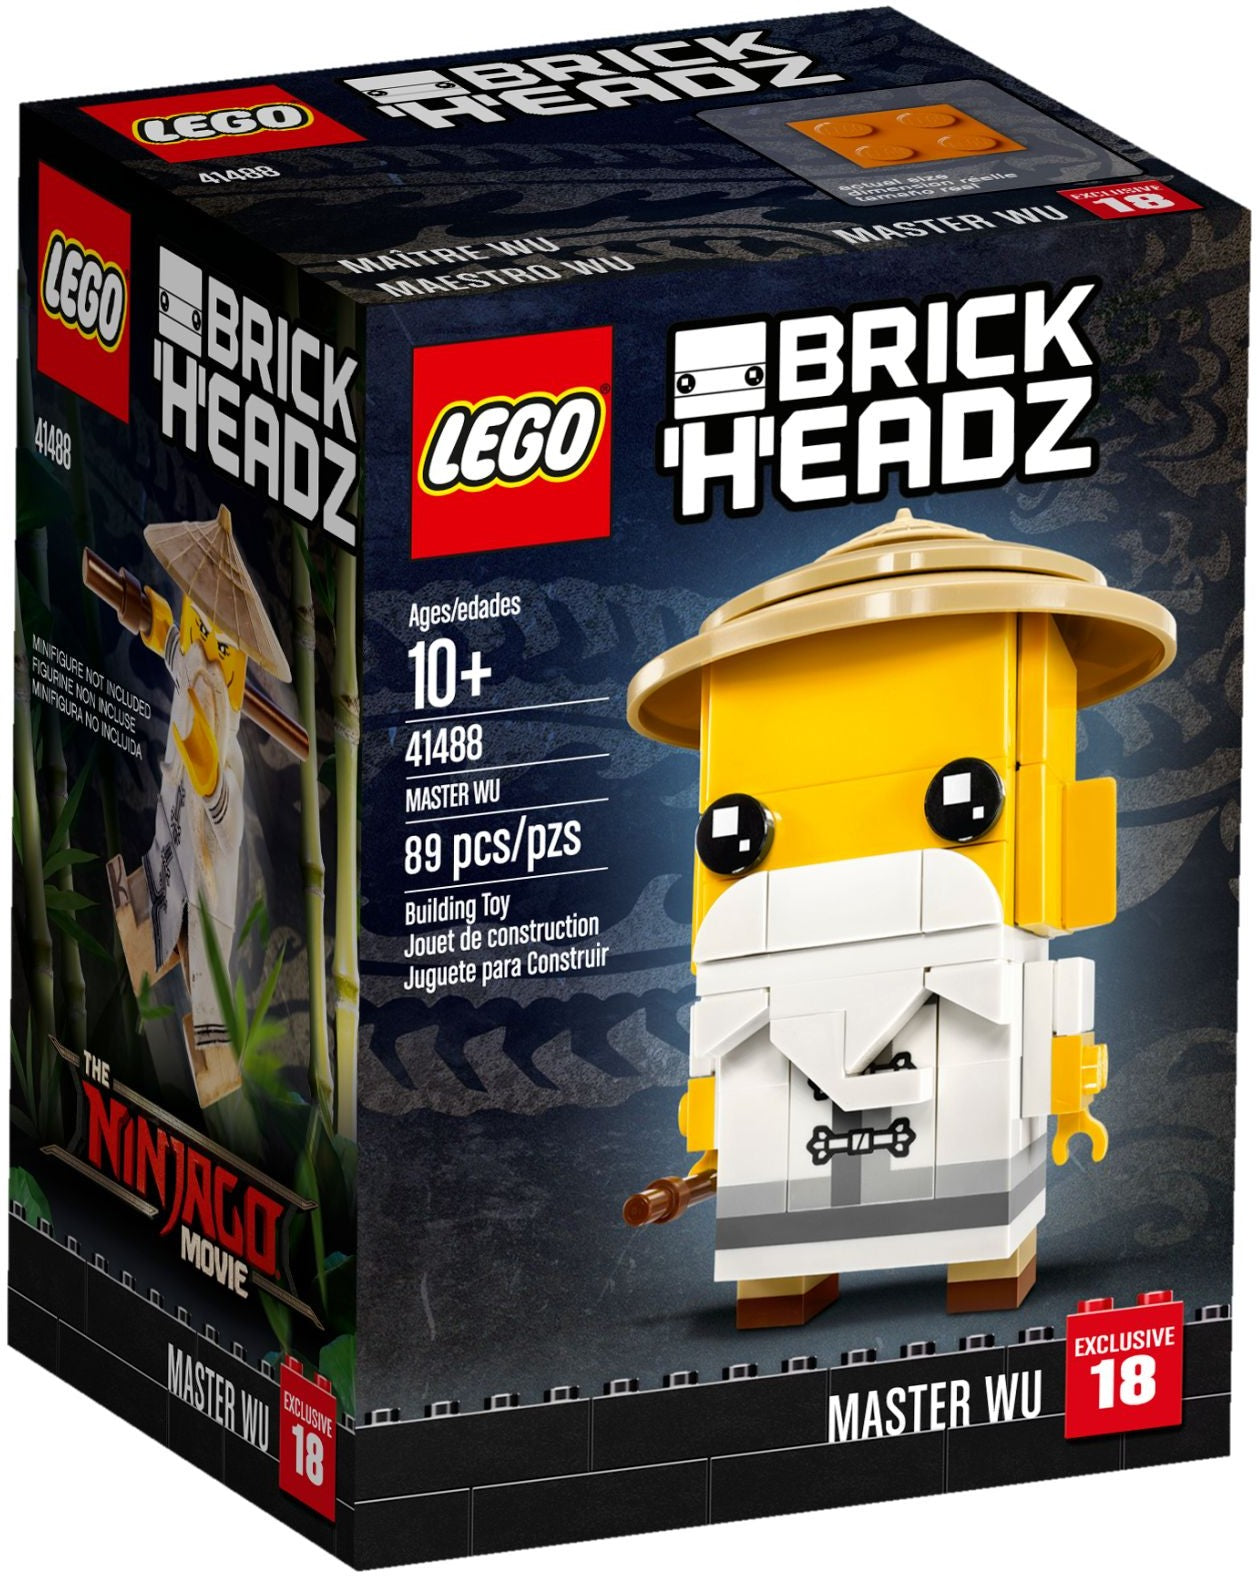 LEGO® BrickHeadz™ 41485 Star Wars™ Finn (91 pieces) – AESOP'S FABLE